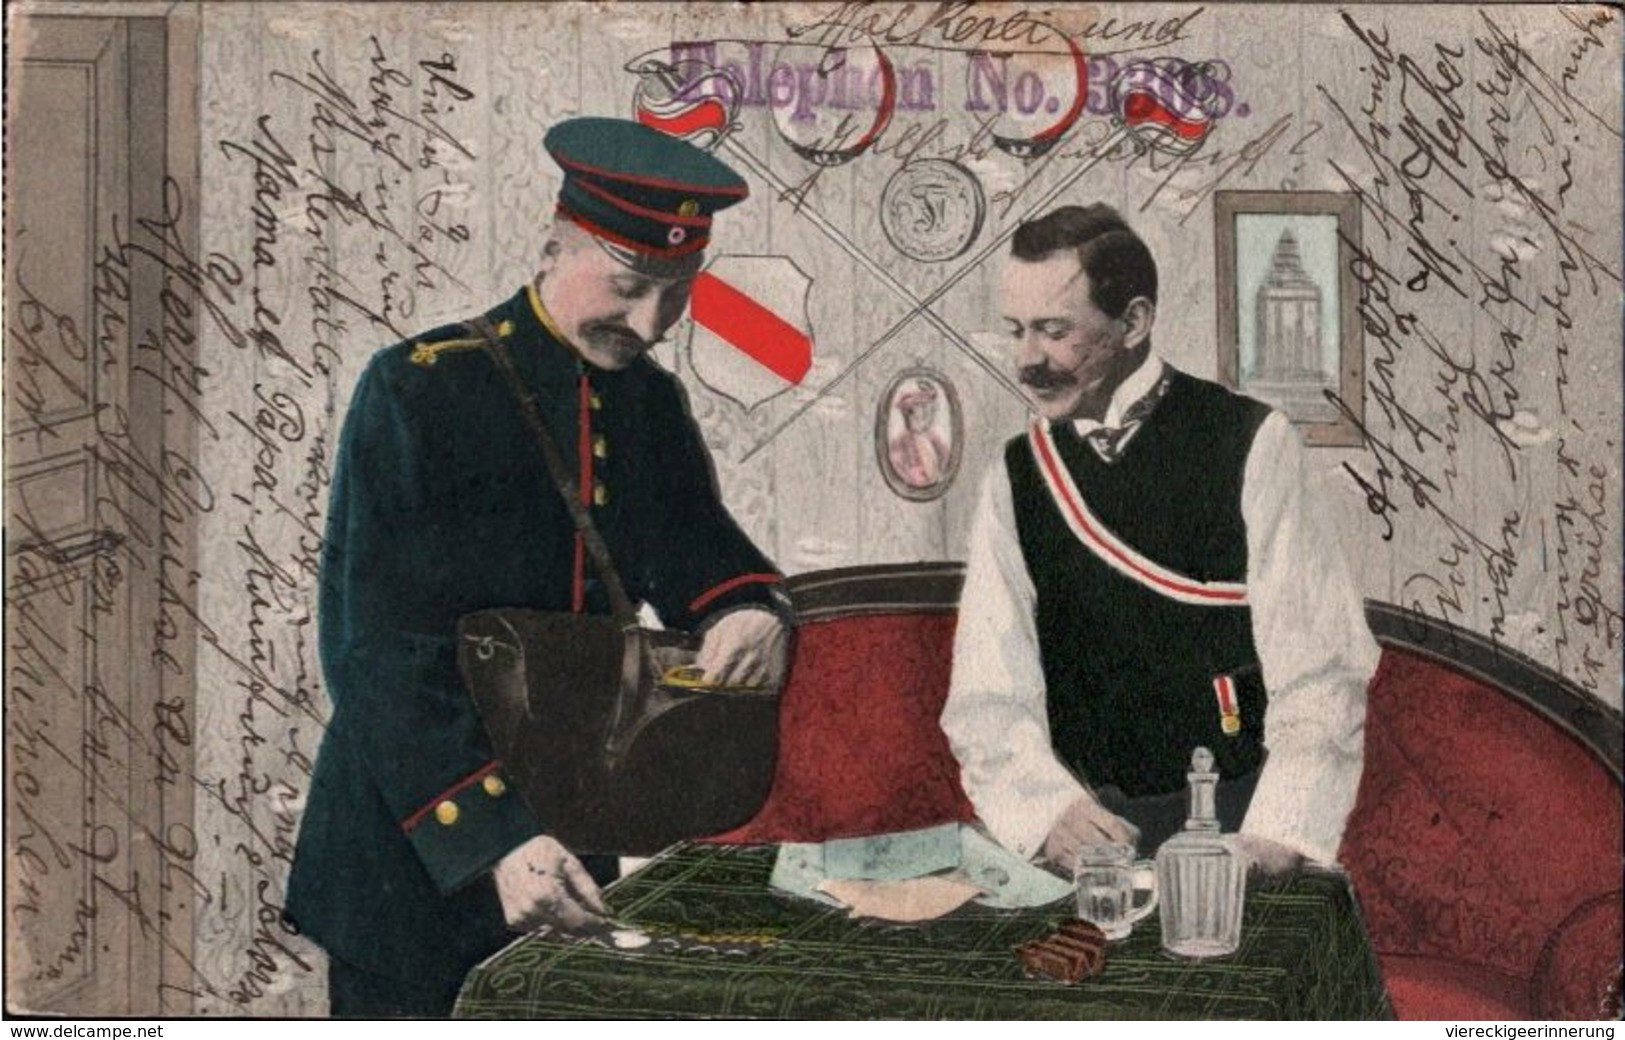 ! Ansichtskarte Geld Briefträger, Student, Studentika, 1907, Mannheim - Poste & Facteurs